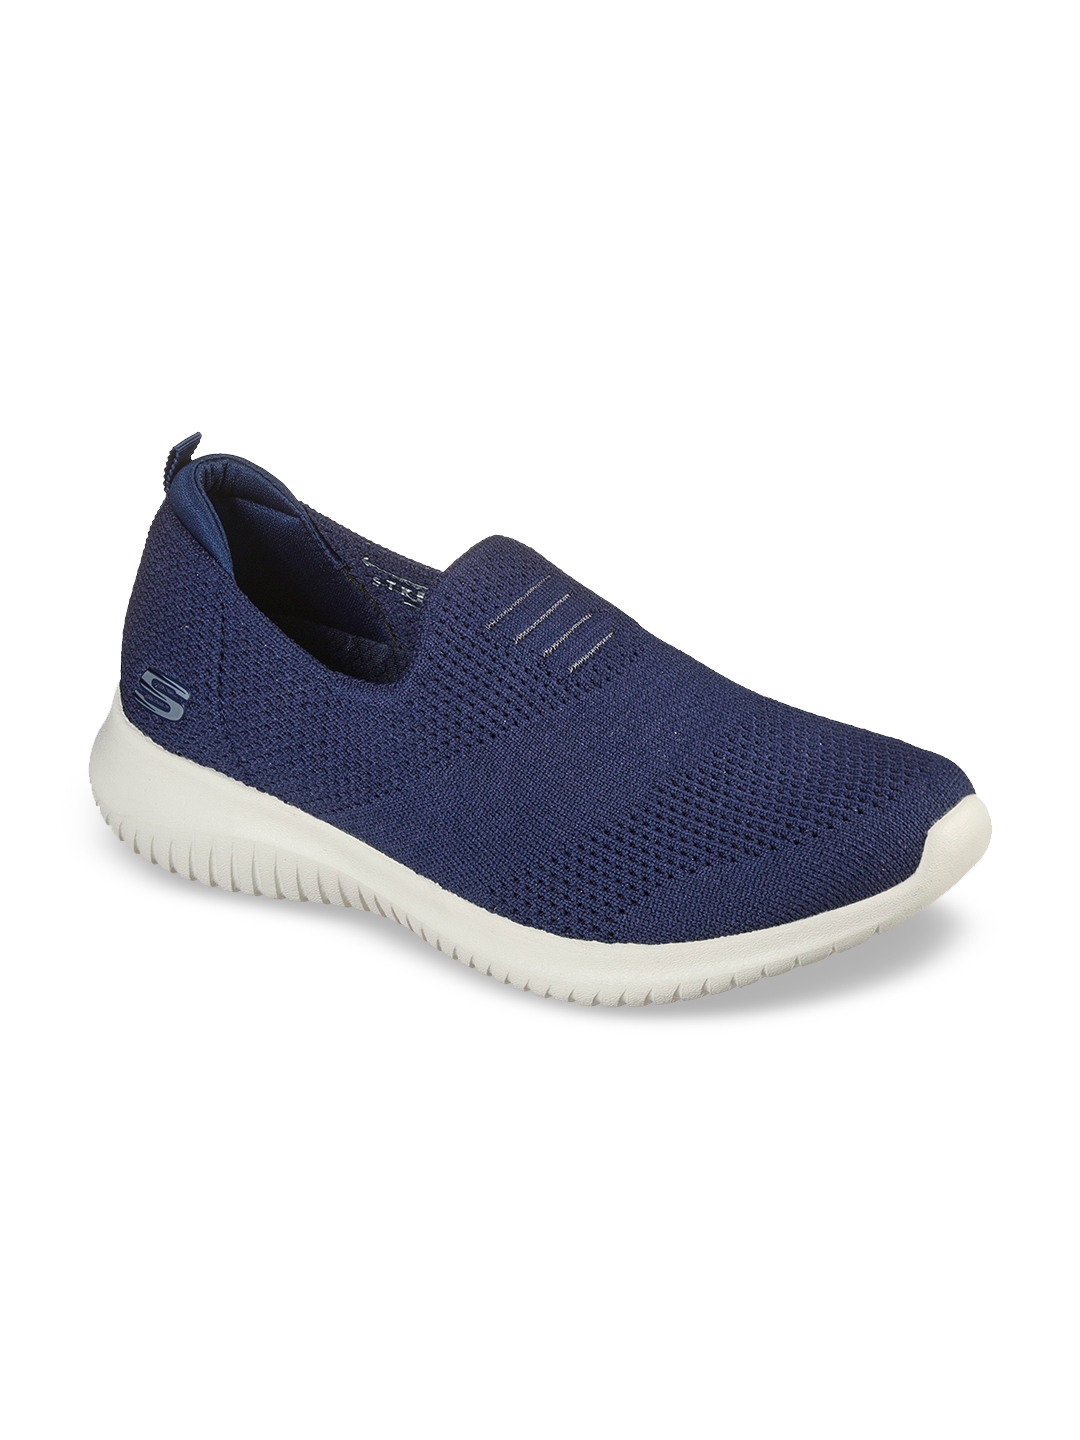 Buy Skechers Women Navy Blue Regular Slip On Sneakers - Casual Shoes ...